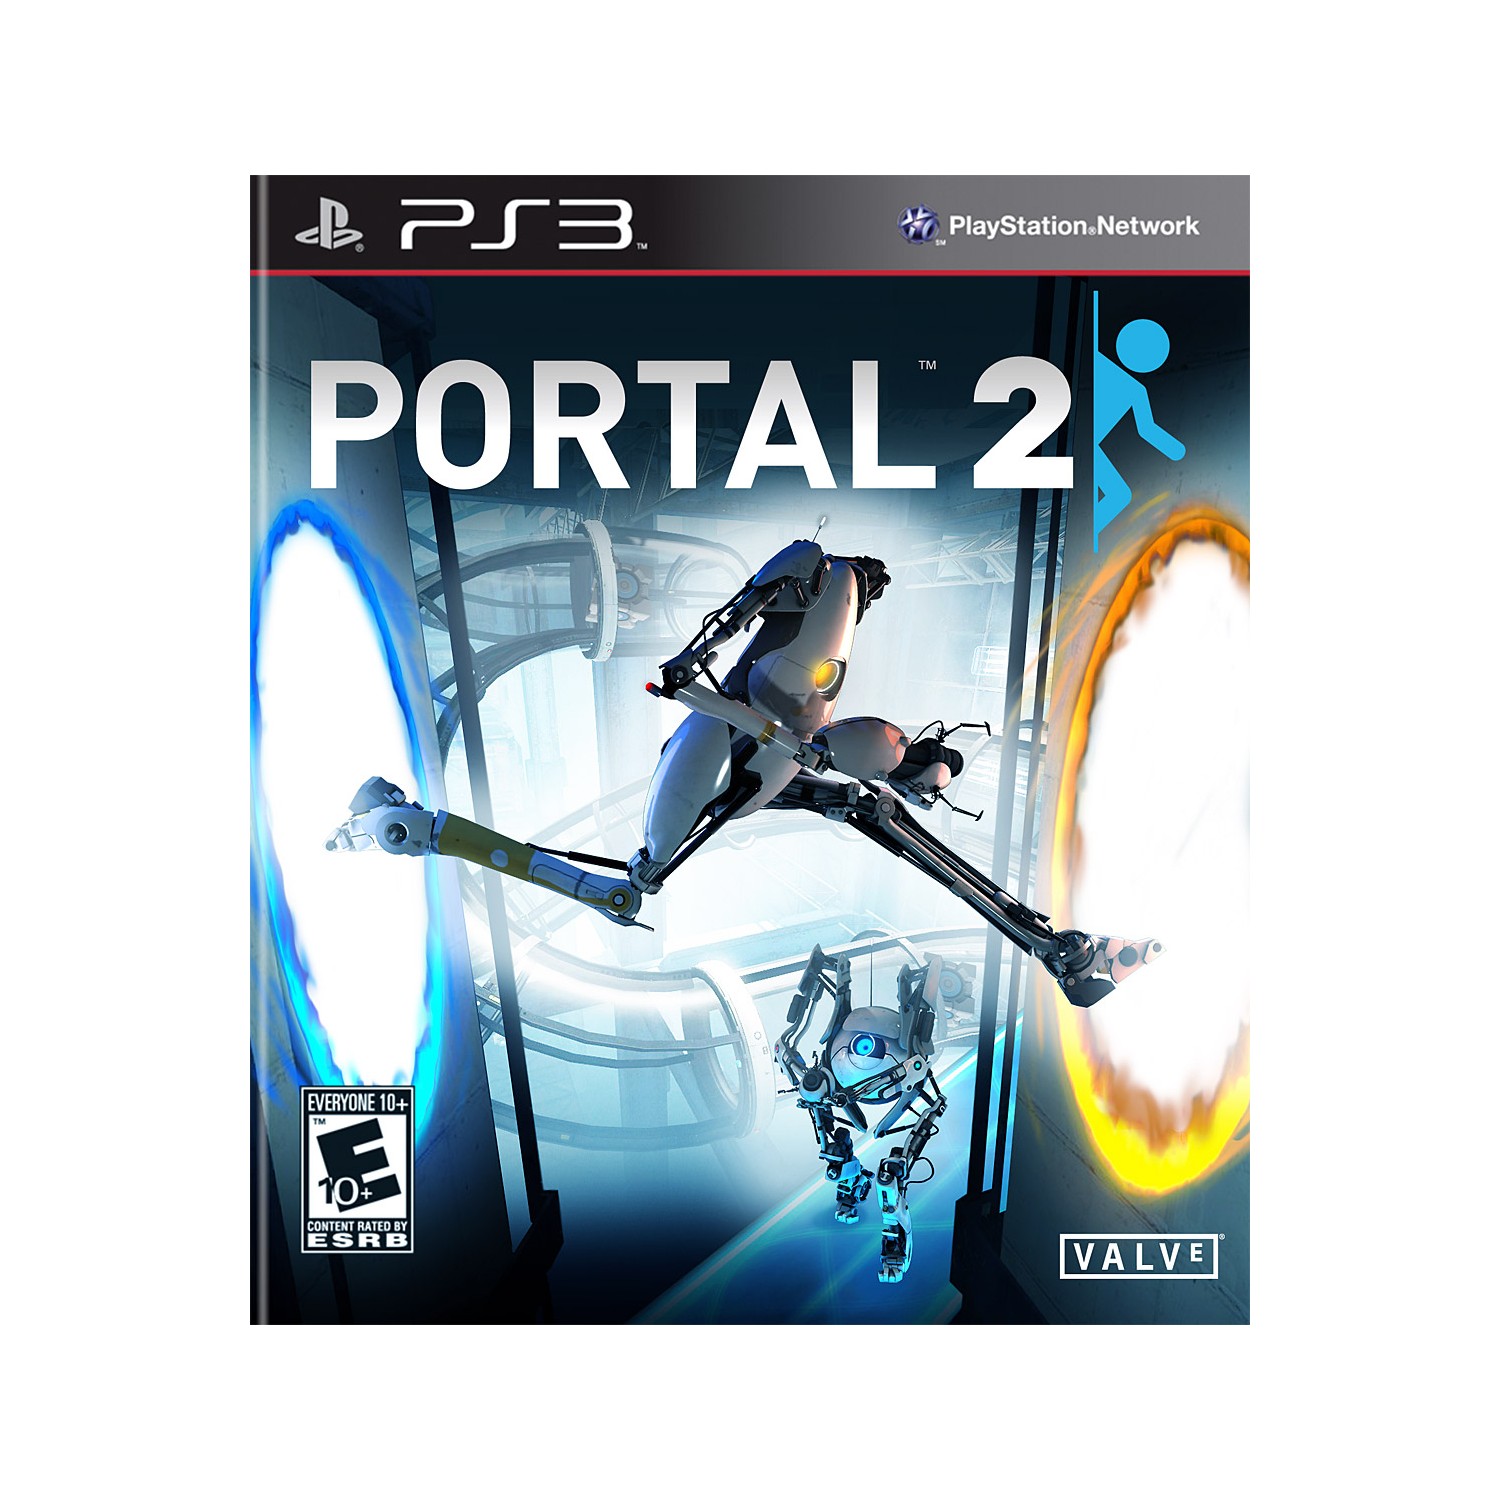 Portal 2 collector edition guide фото 90